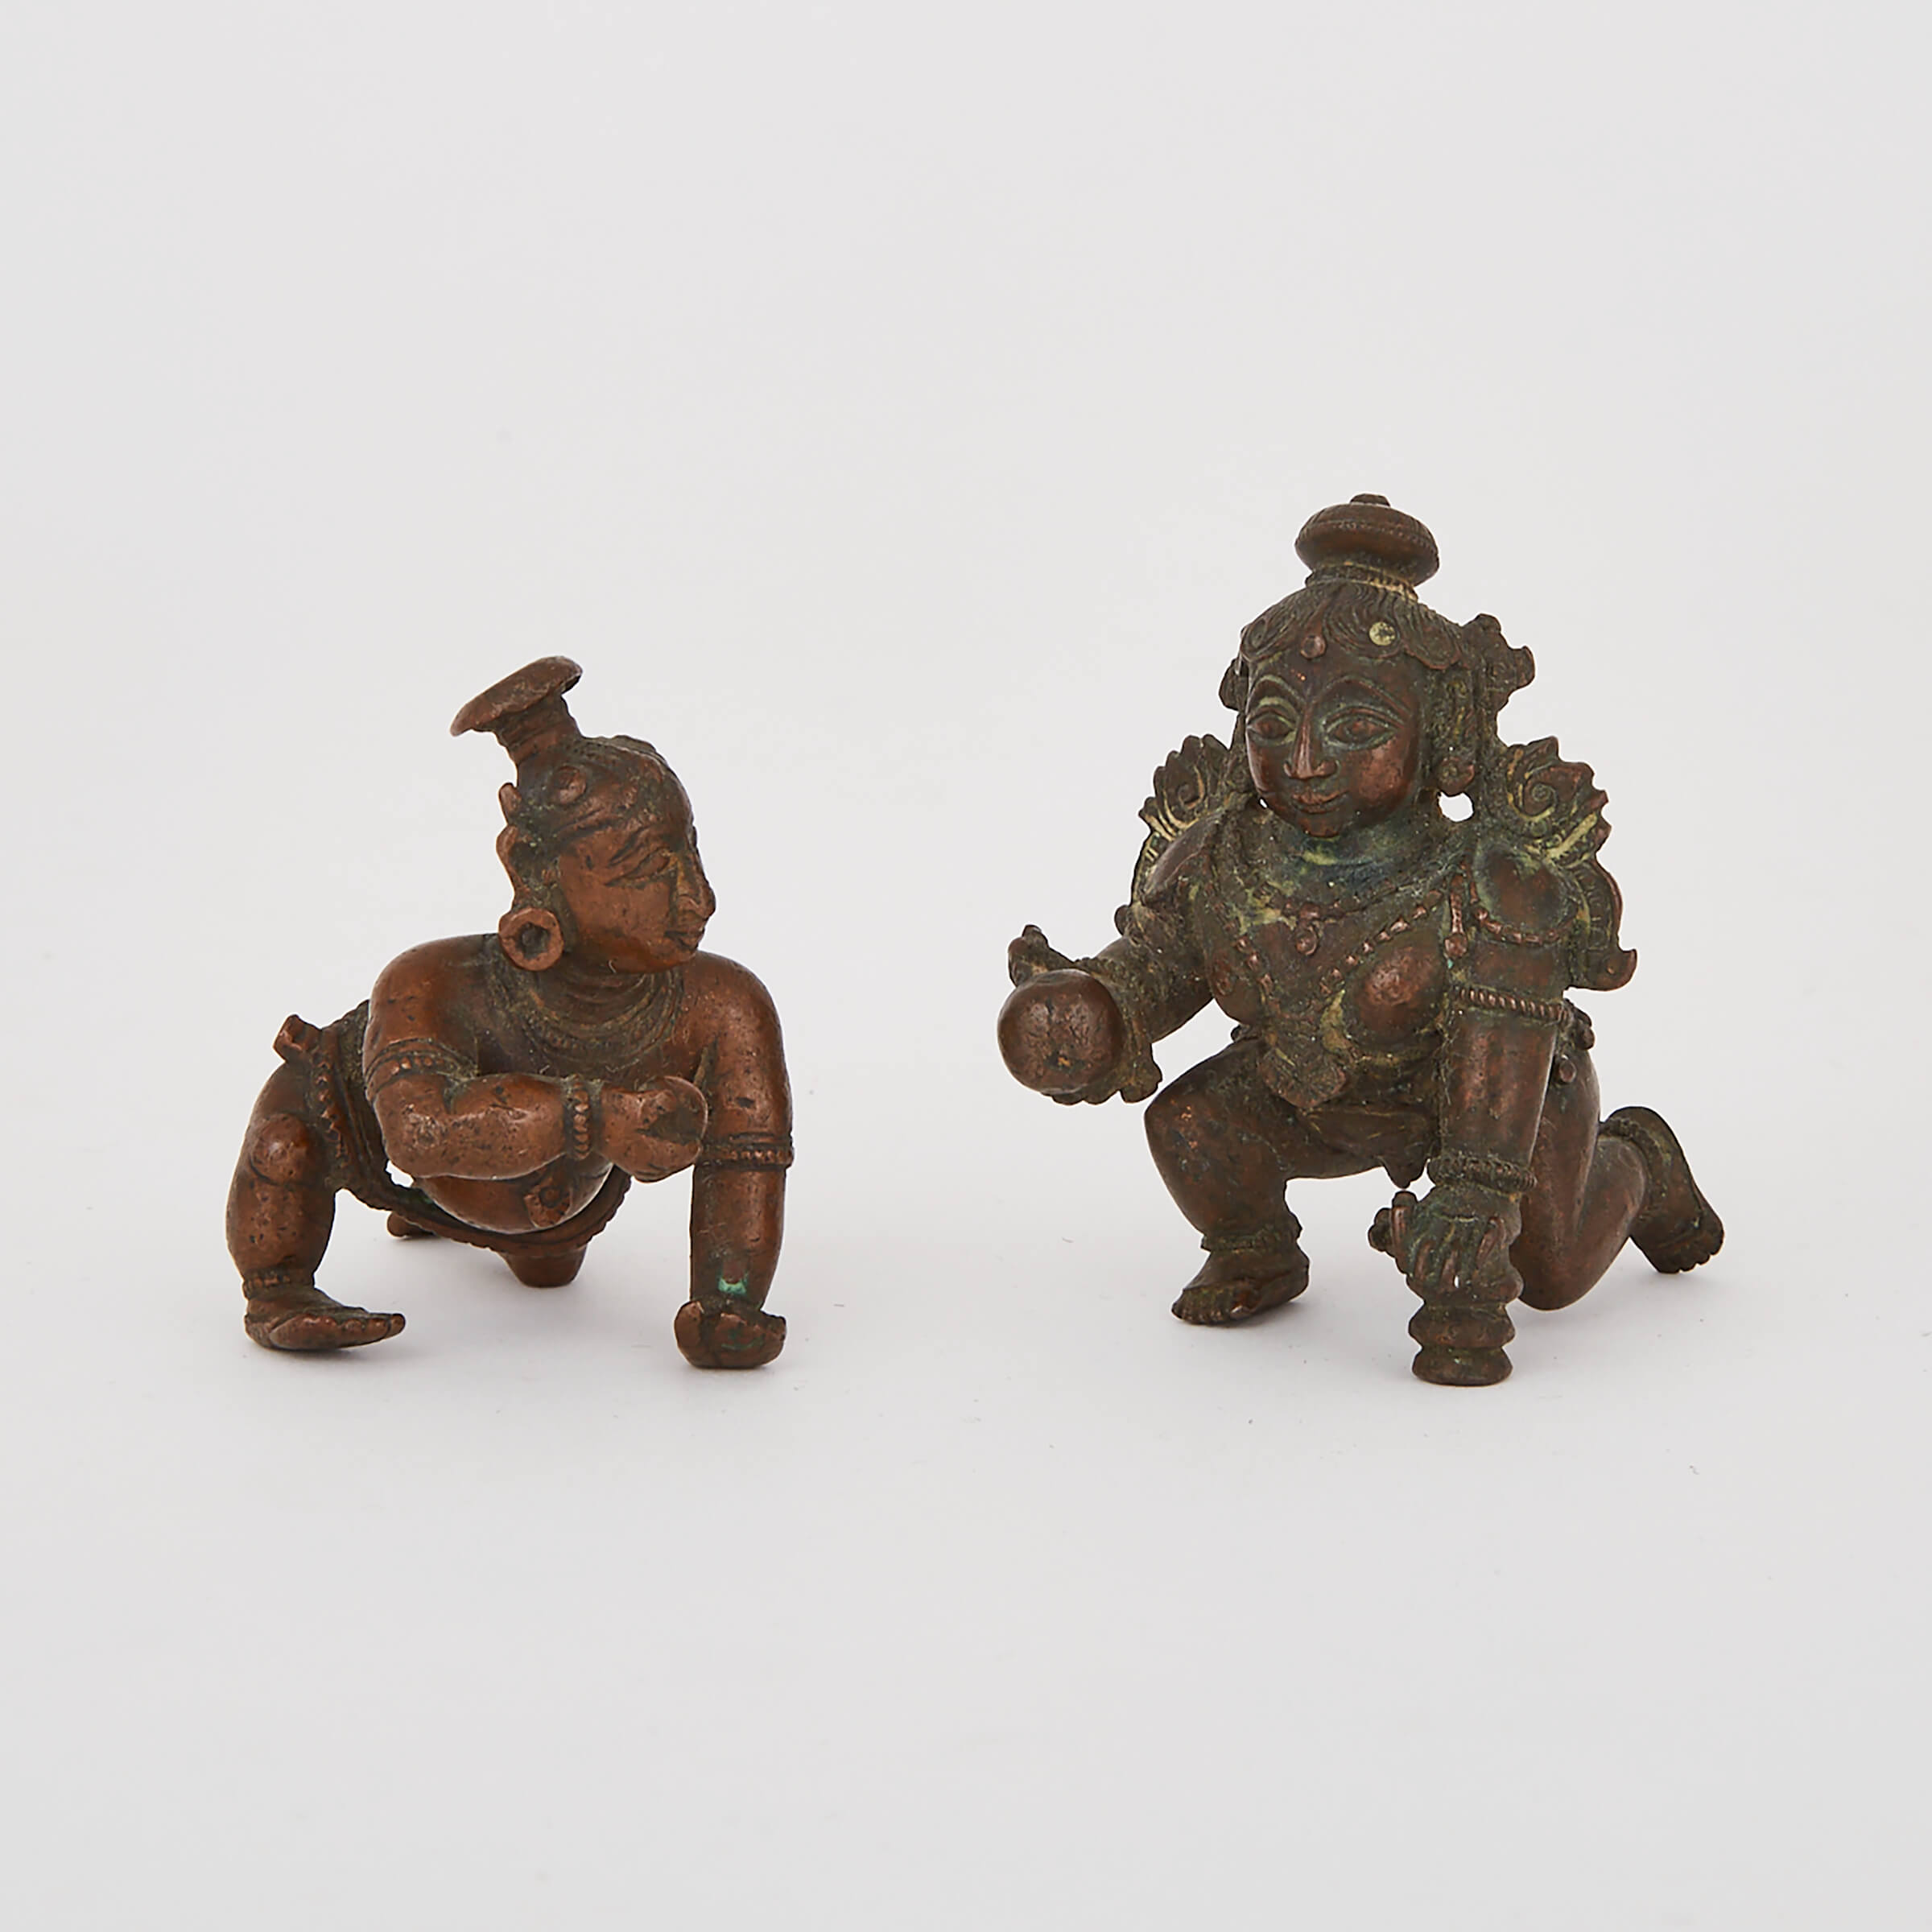 Two Southeast Asian Miniature Bronze Figures of Hindu Deities, 19th century